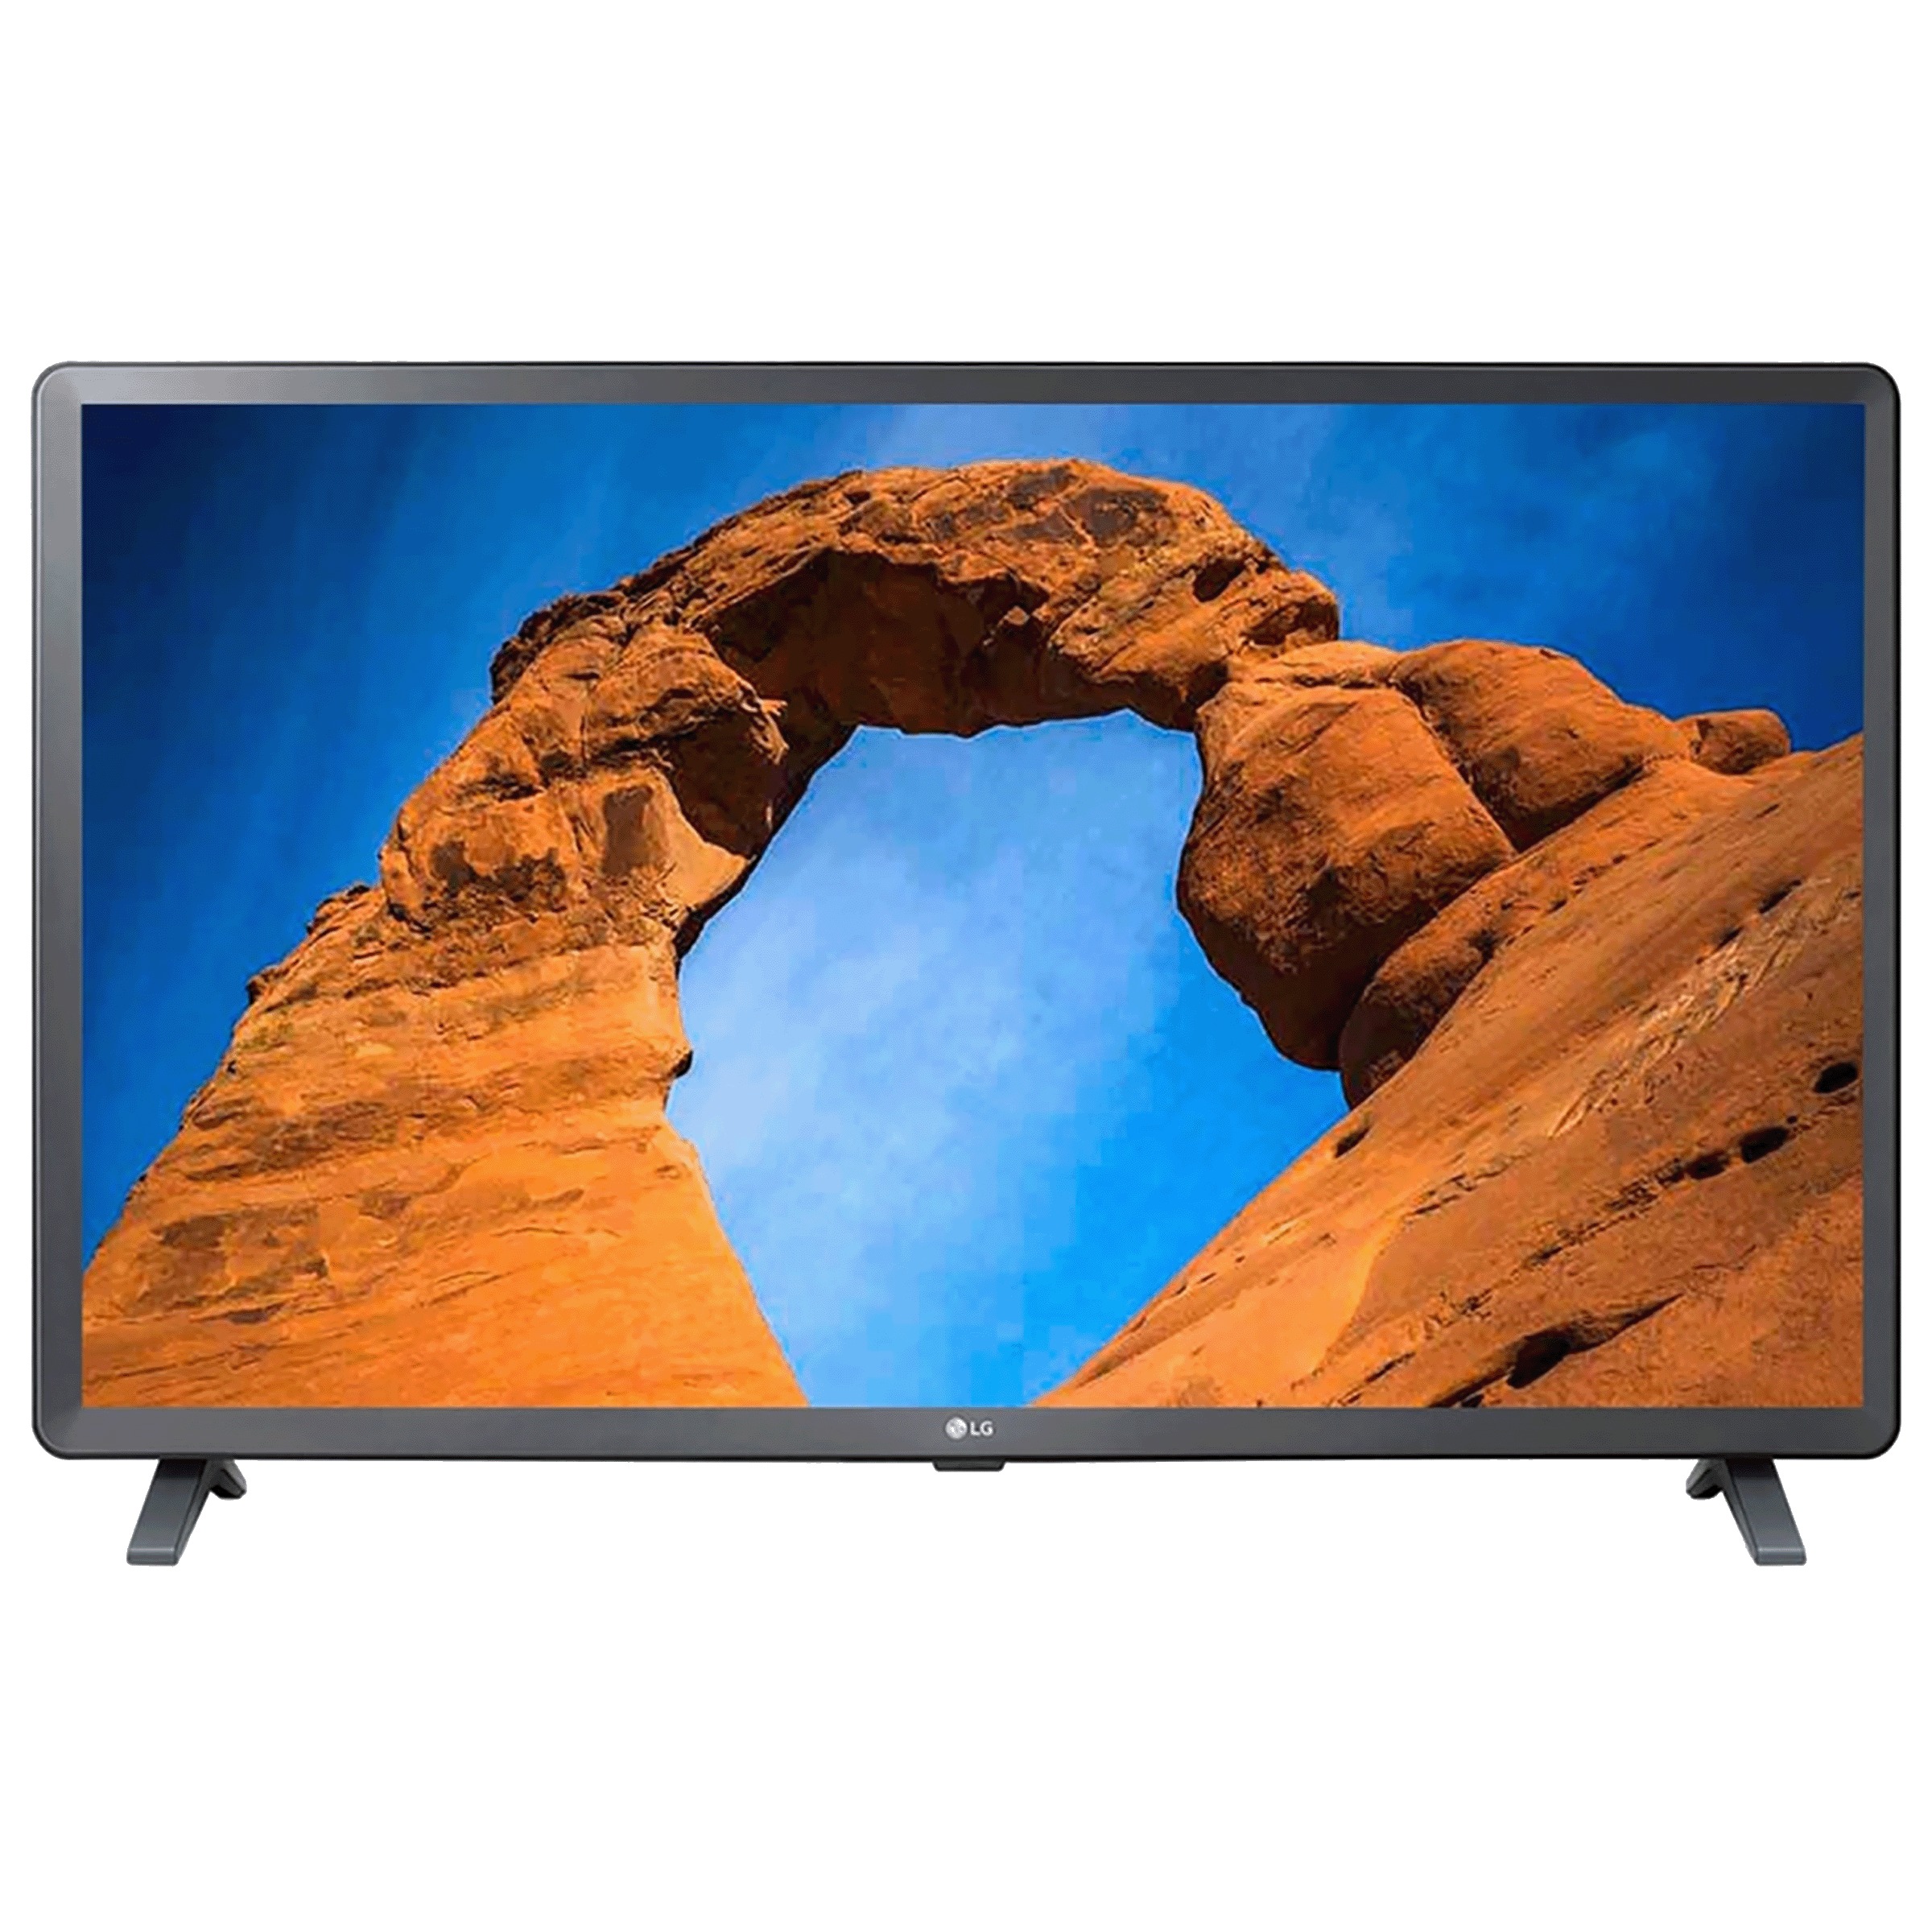 LG 81 cm (32 inch) HD LED TV (32LK536BPTB, Black)_1